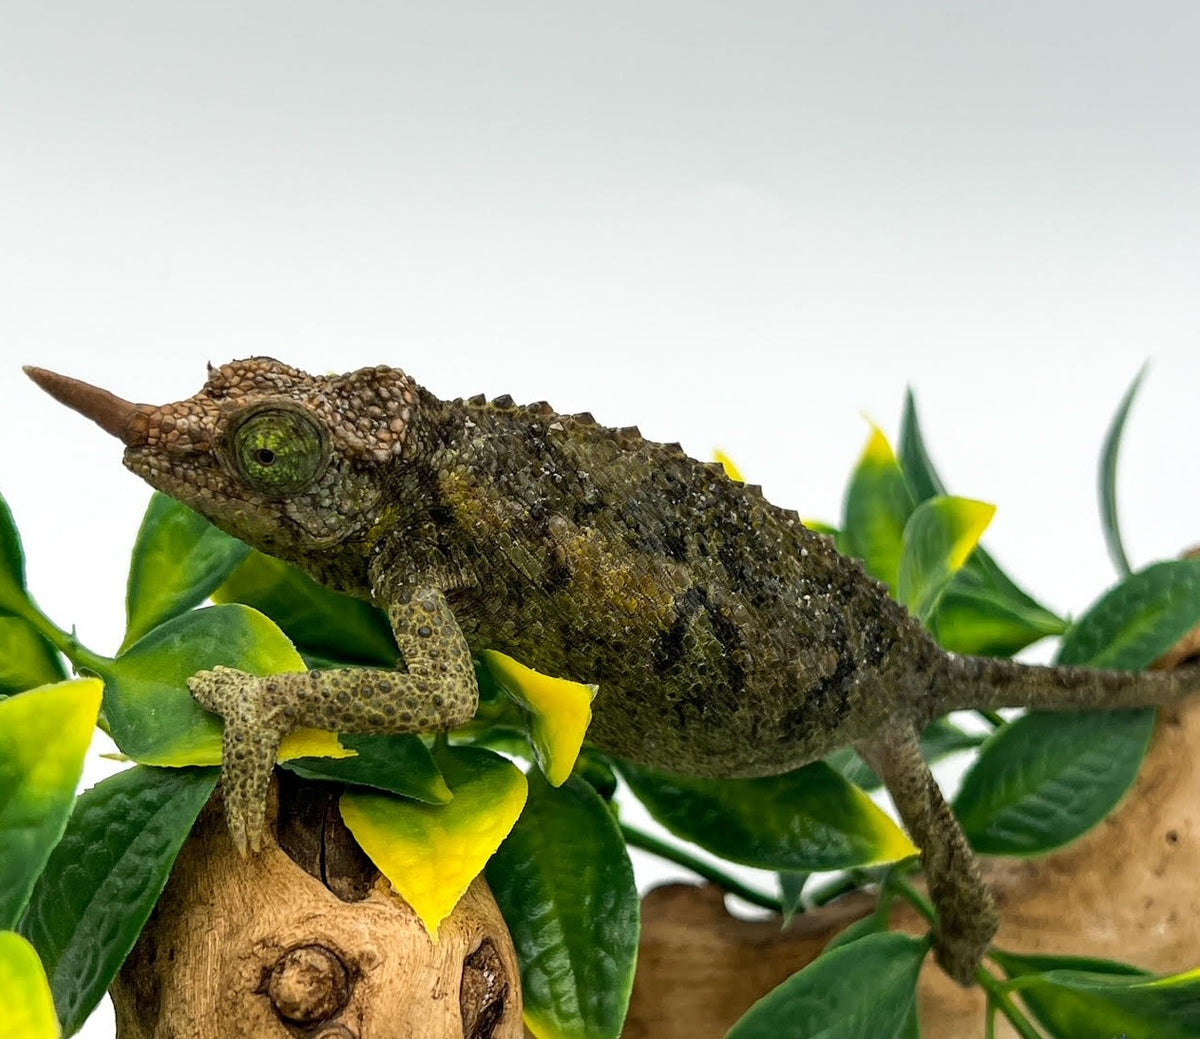 Rainbow Jacksons Chameleon For Sale - Upriva Reptiles